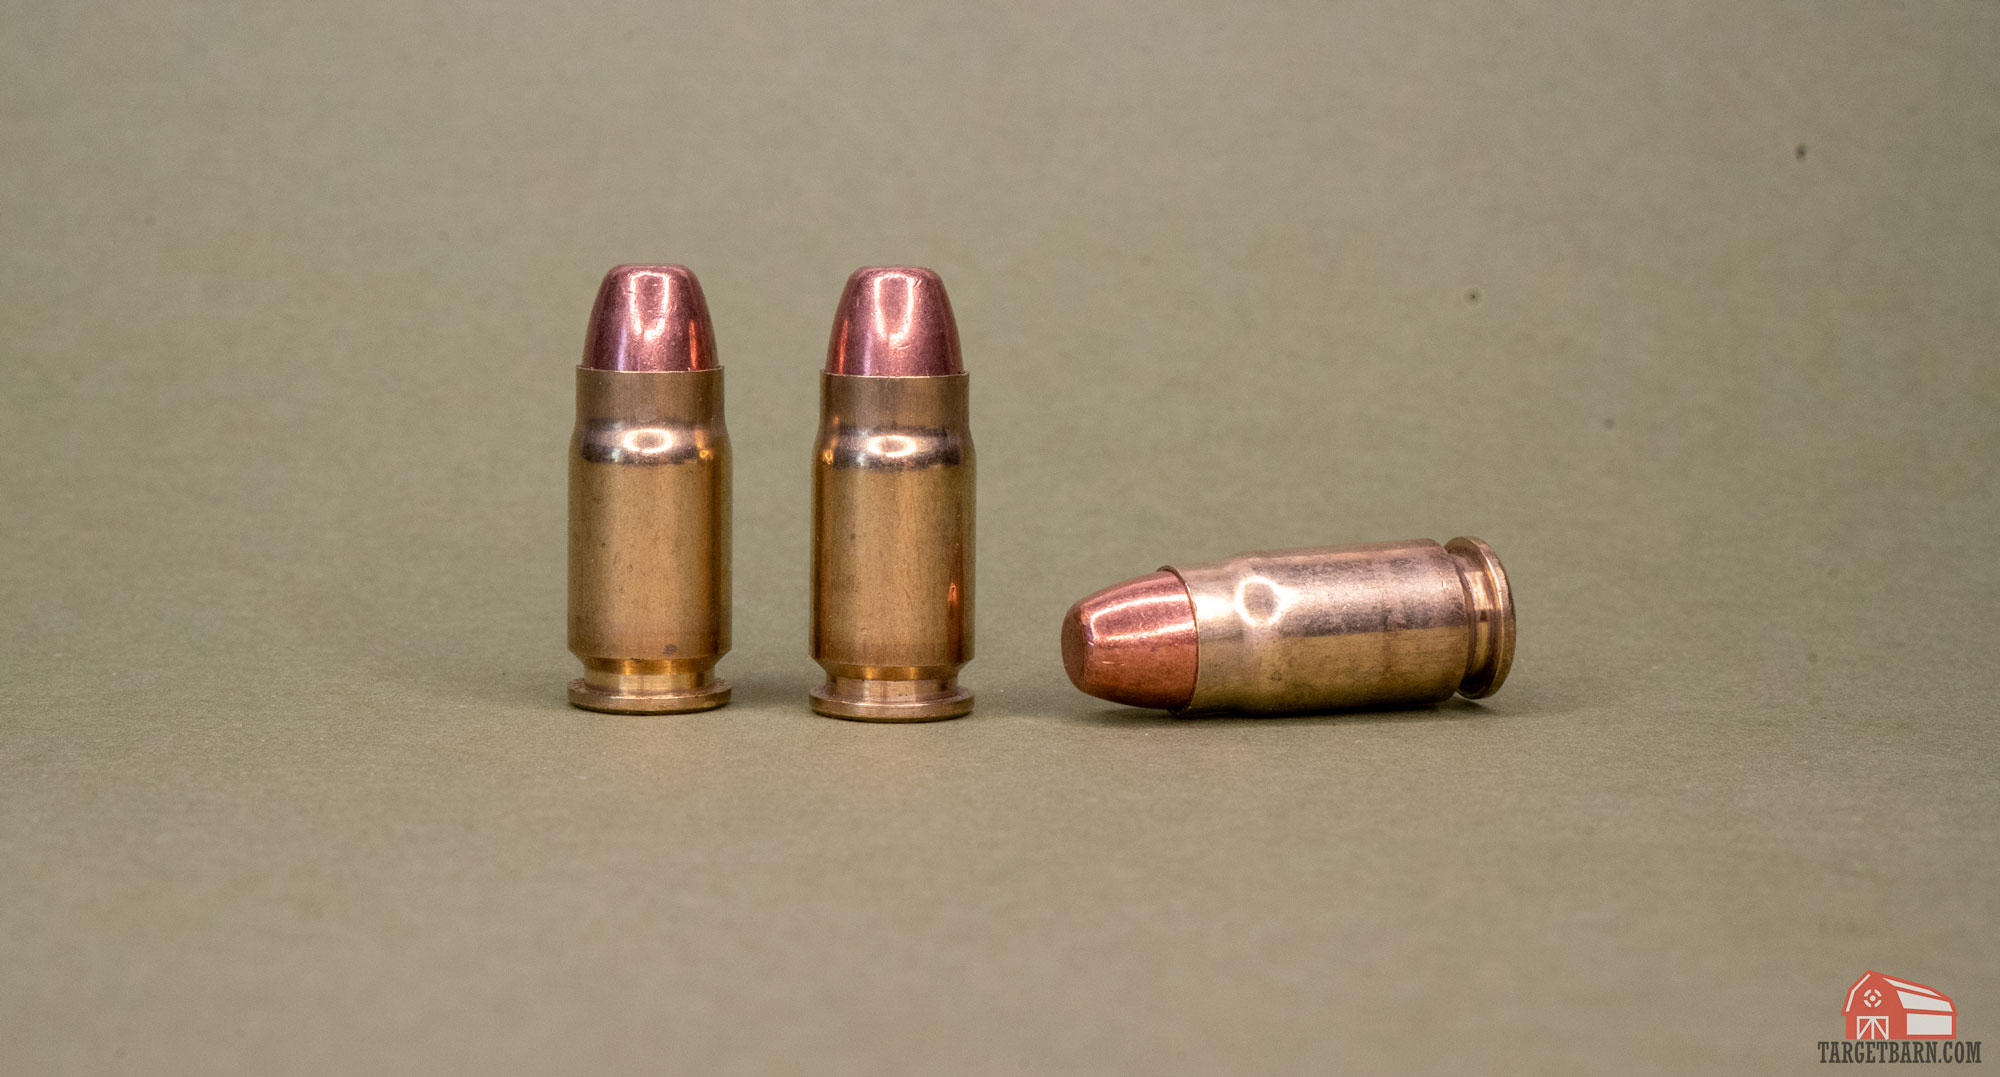 three rounds of 357 sig ammunition